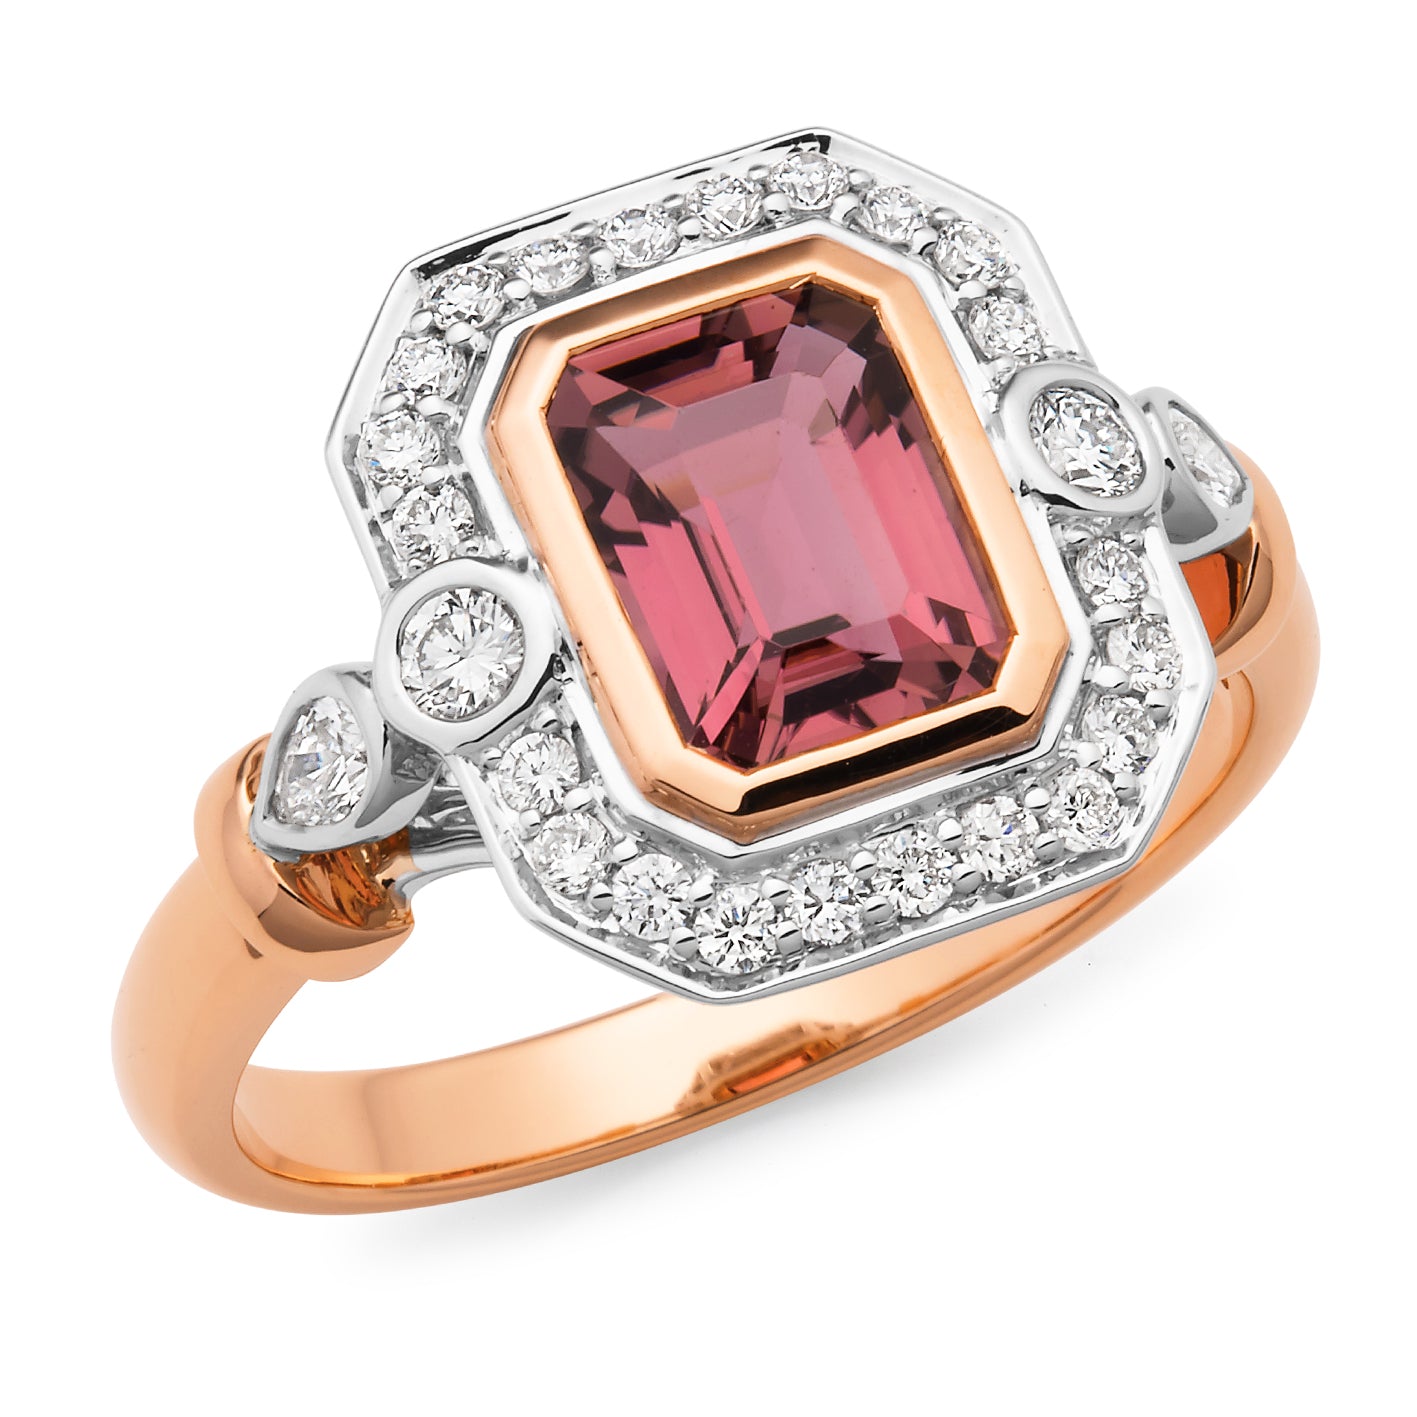 Maddison' Pink Tourmaline & Diamond Ring in 18ct Rose & White Gold